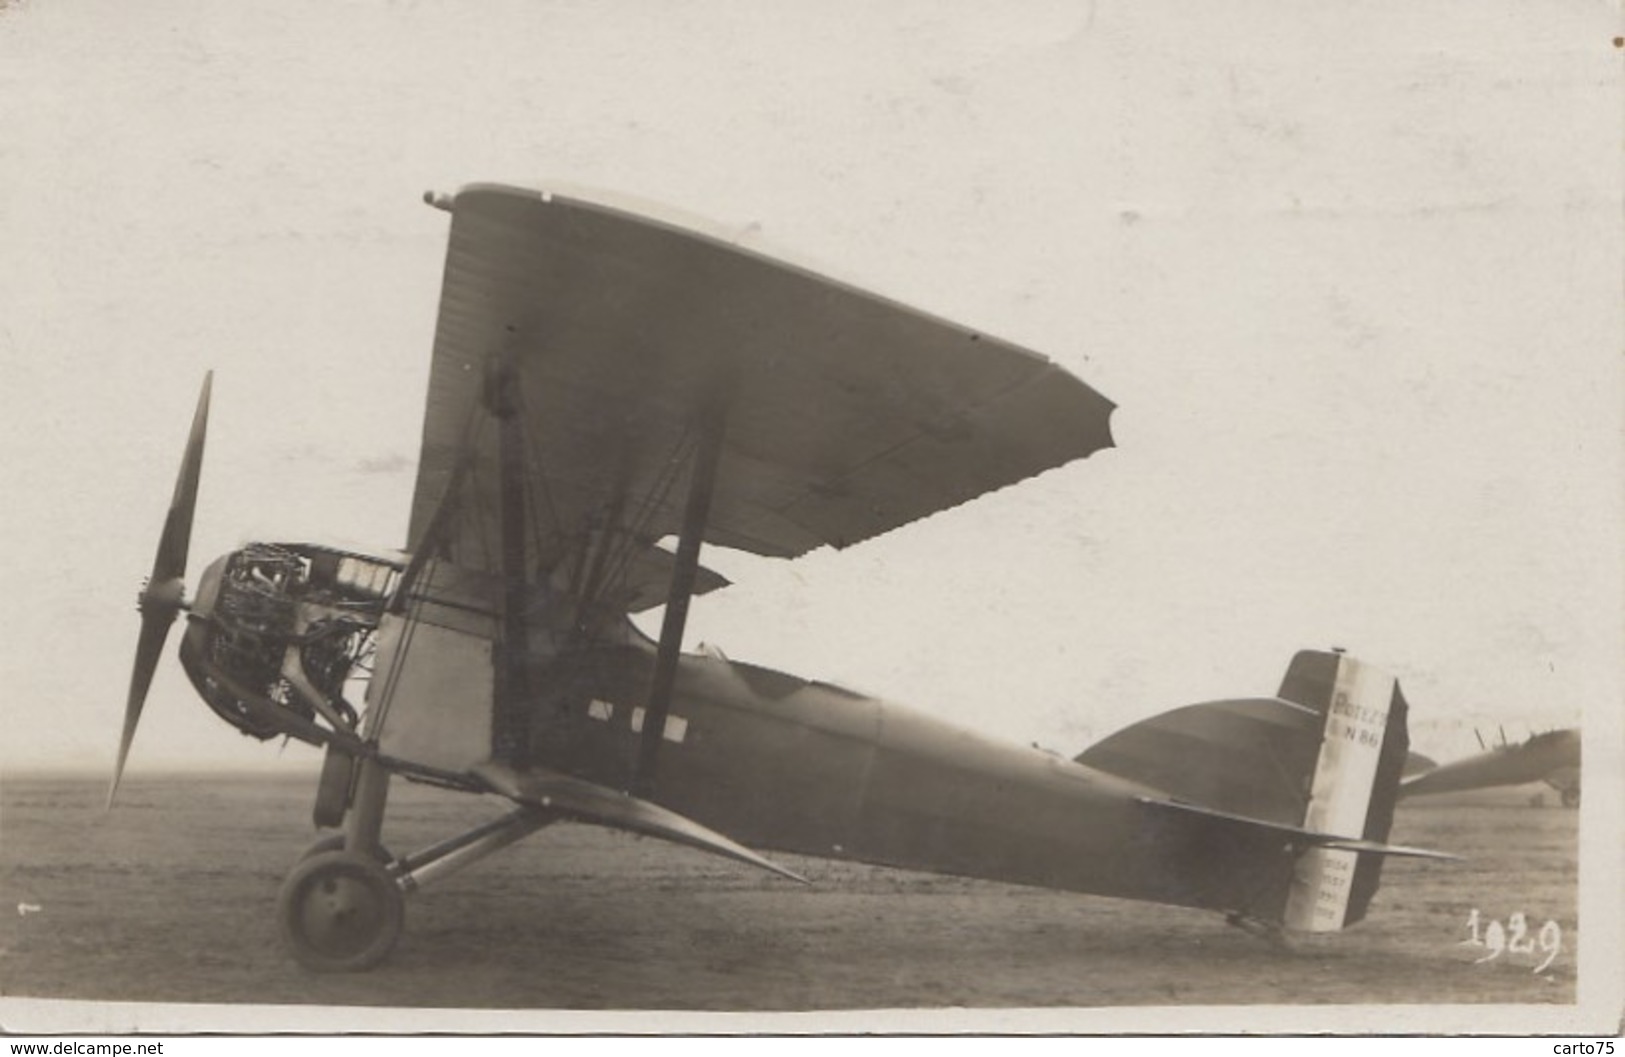 Aviation - Avion Potez - Metz 1929 - Correspondant Mopin Parfums Isabey Ile-Saint-Denis - Carte-photo - 1919-1938: Between Wars